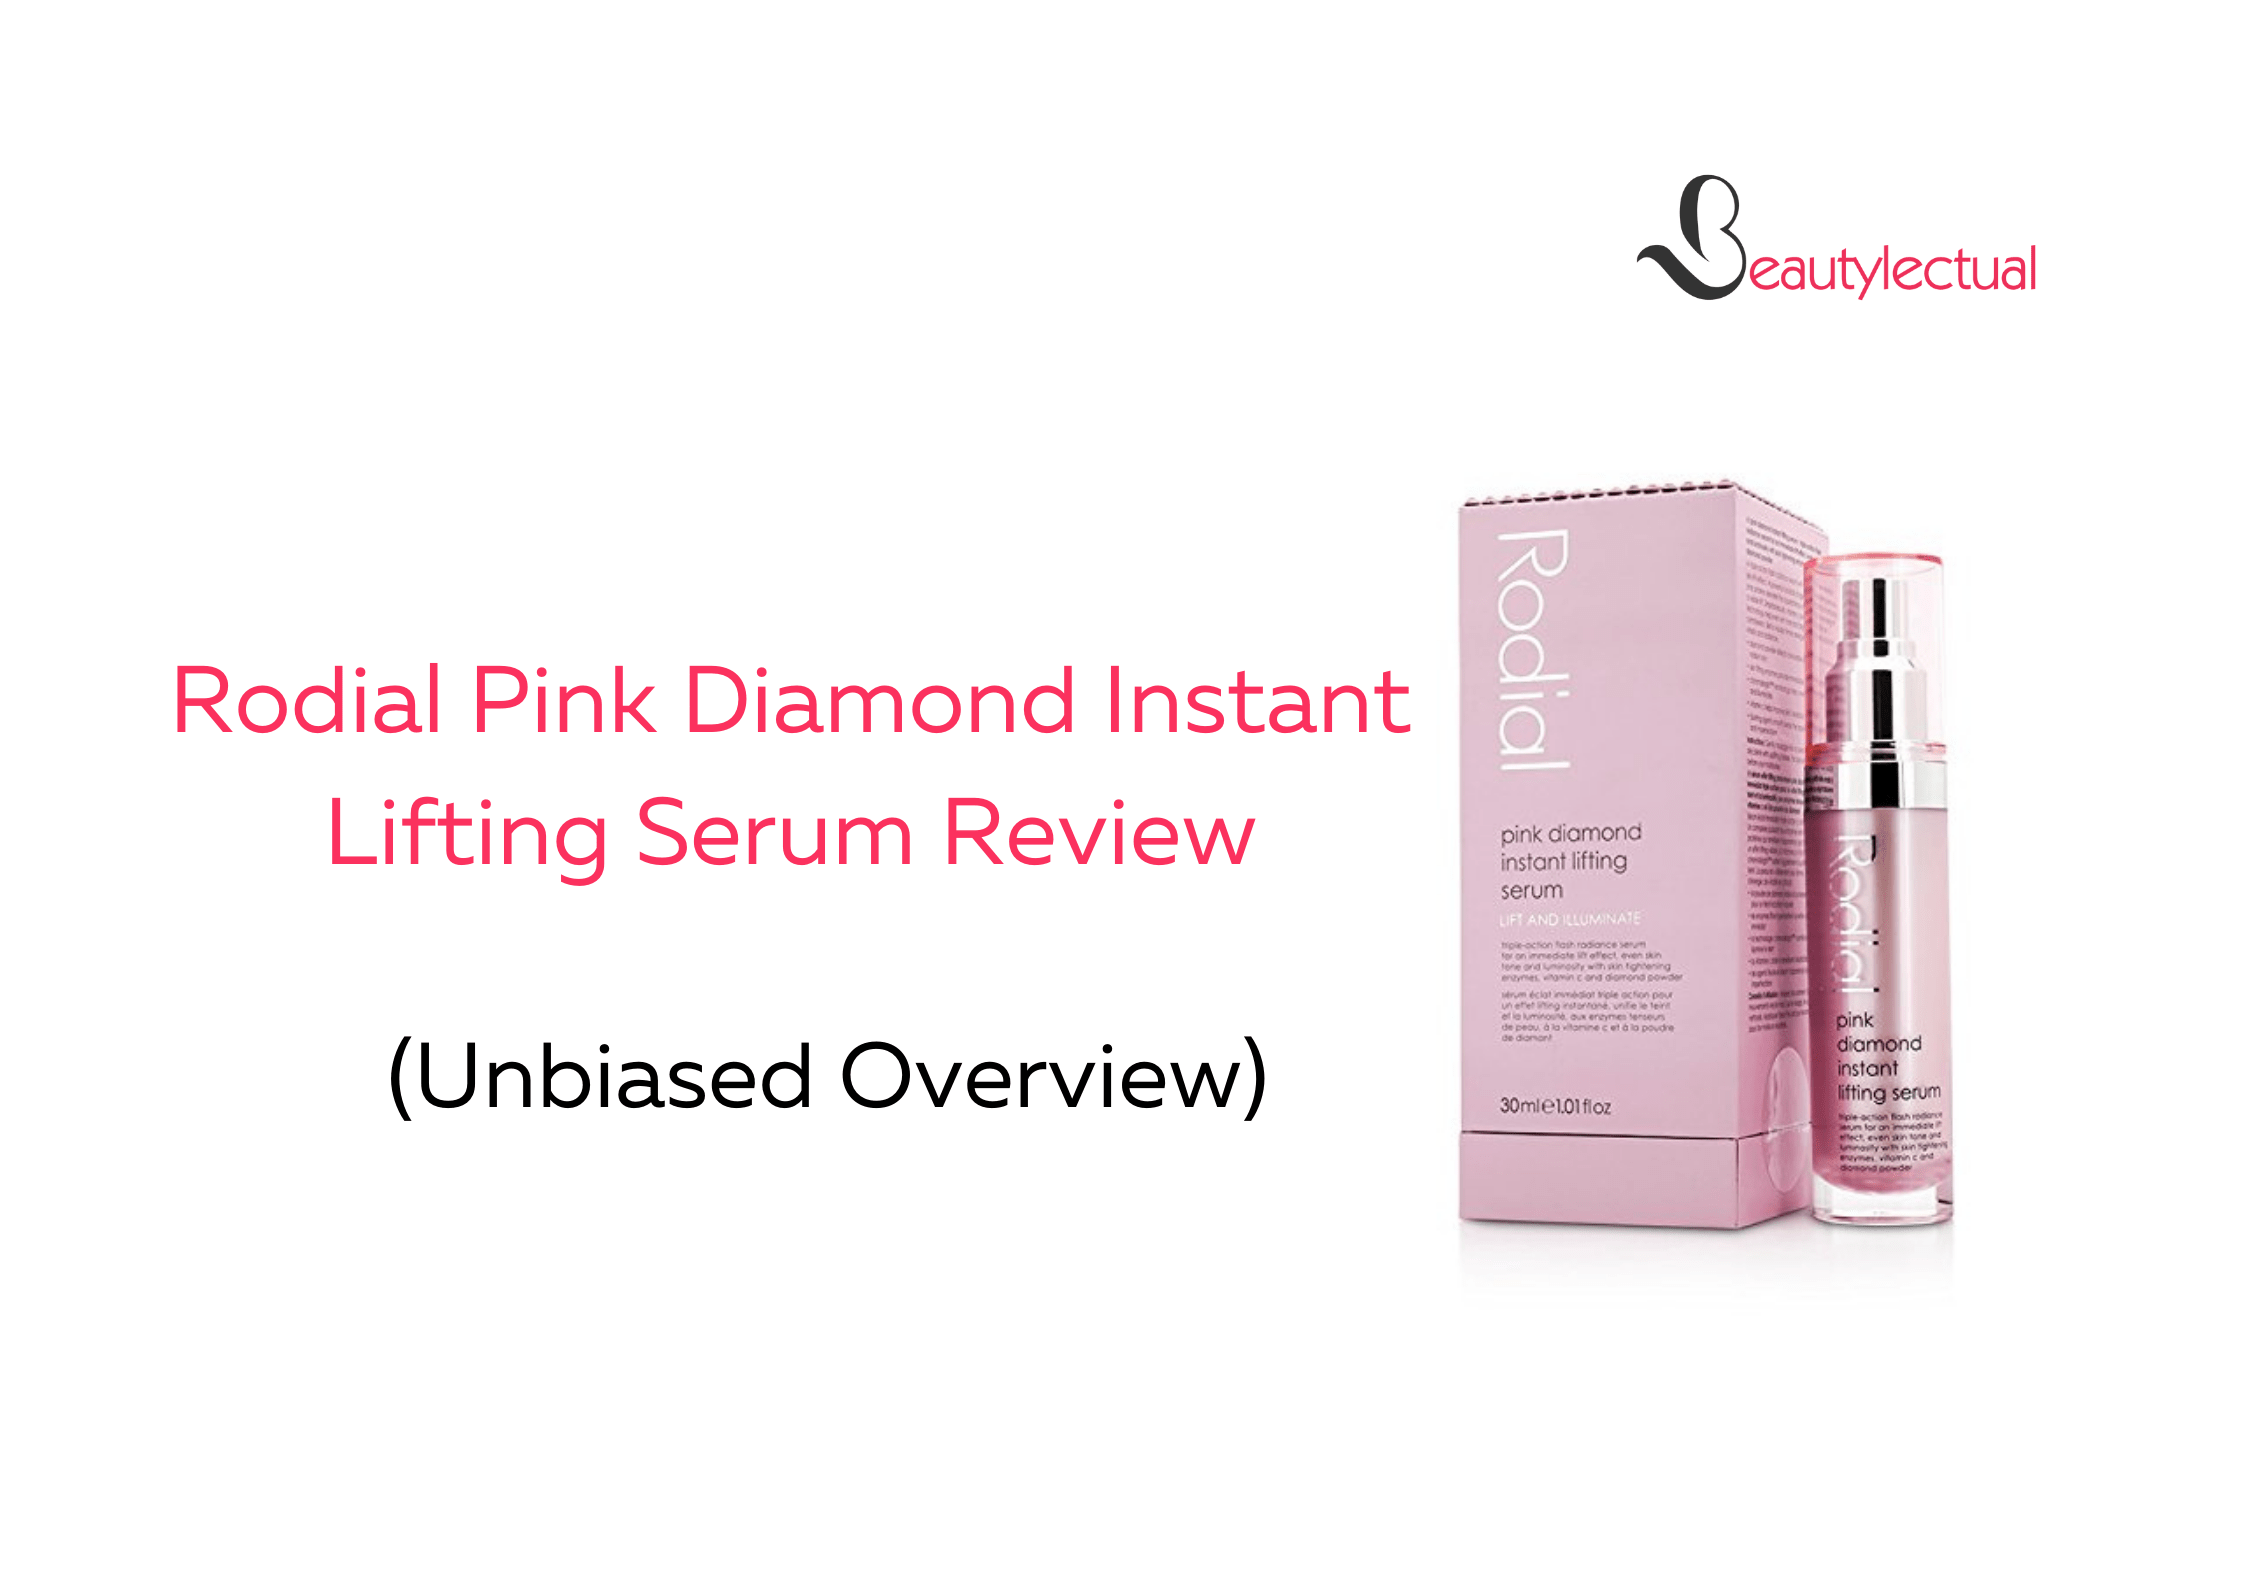 Rodial Pink Diamond Instant Lifting Serum Reviews